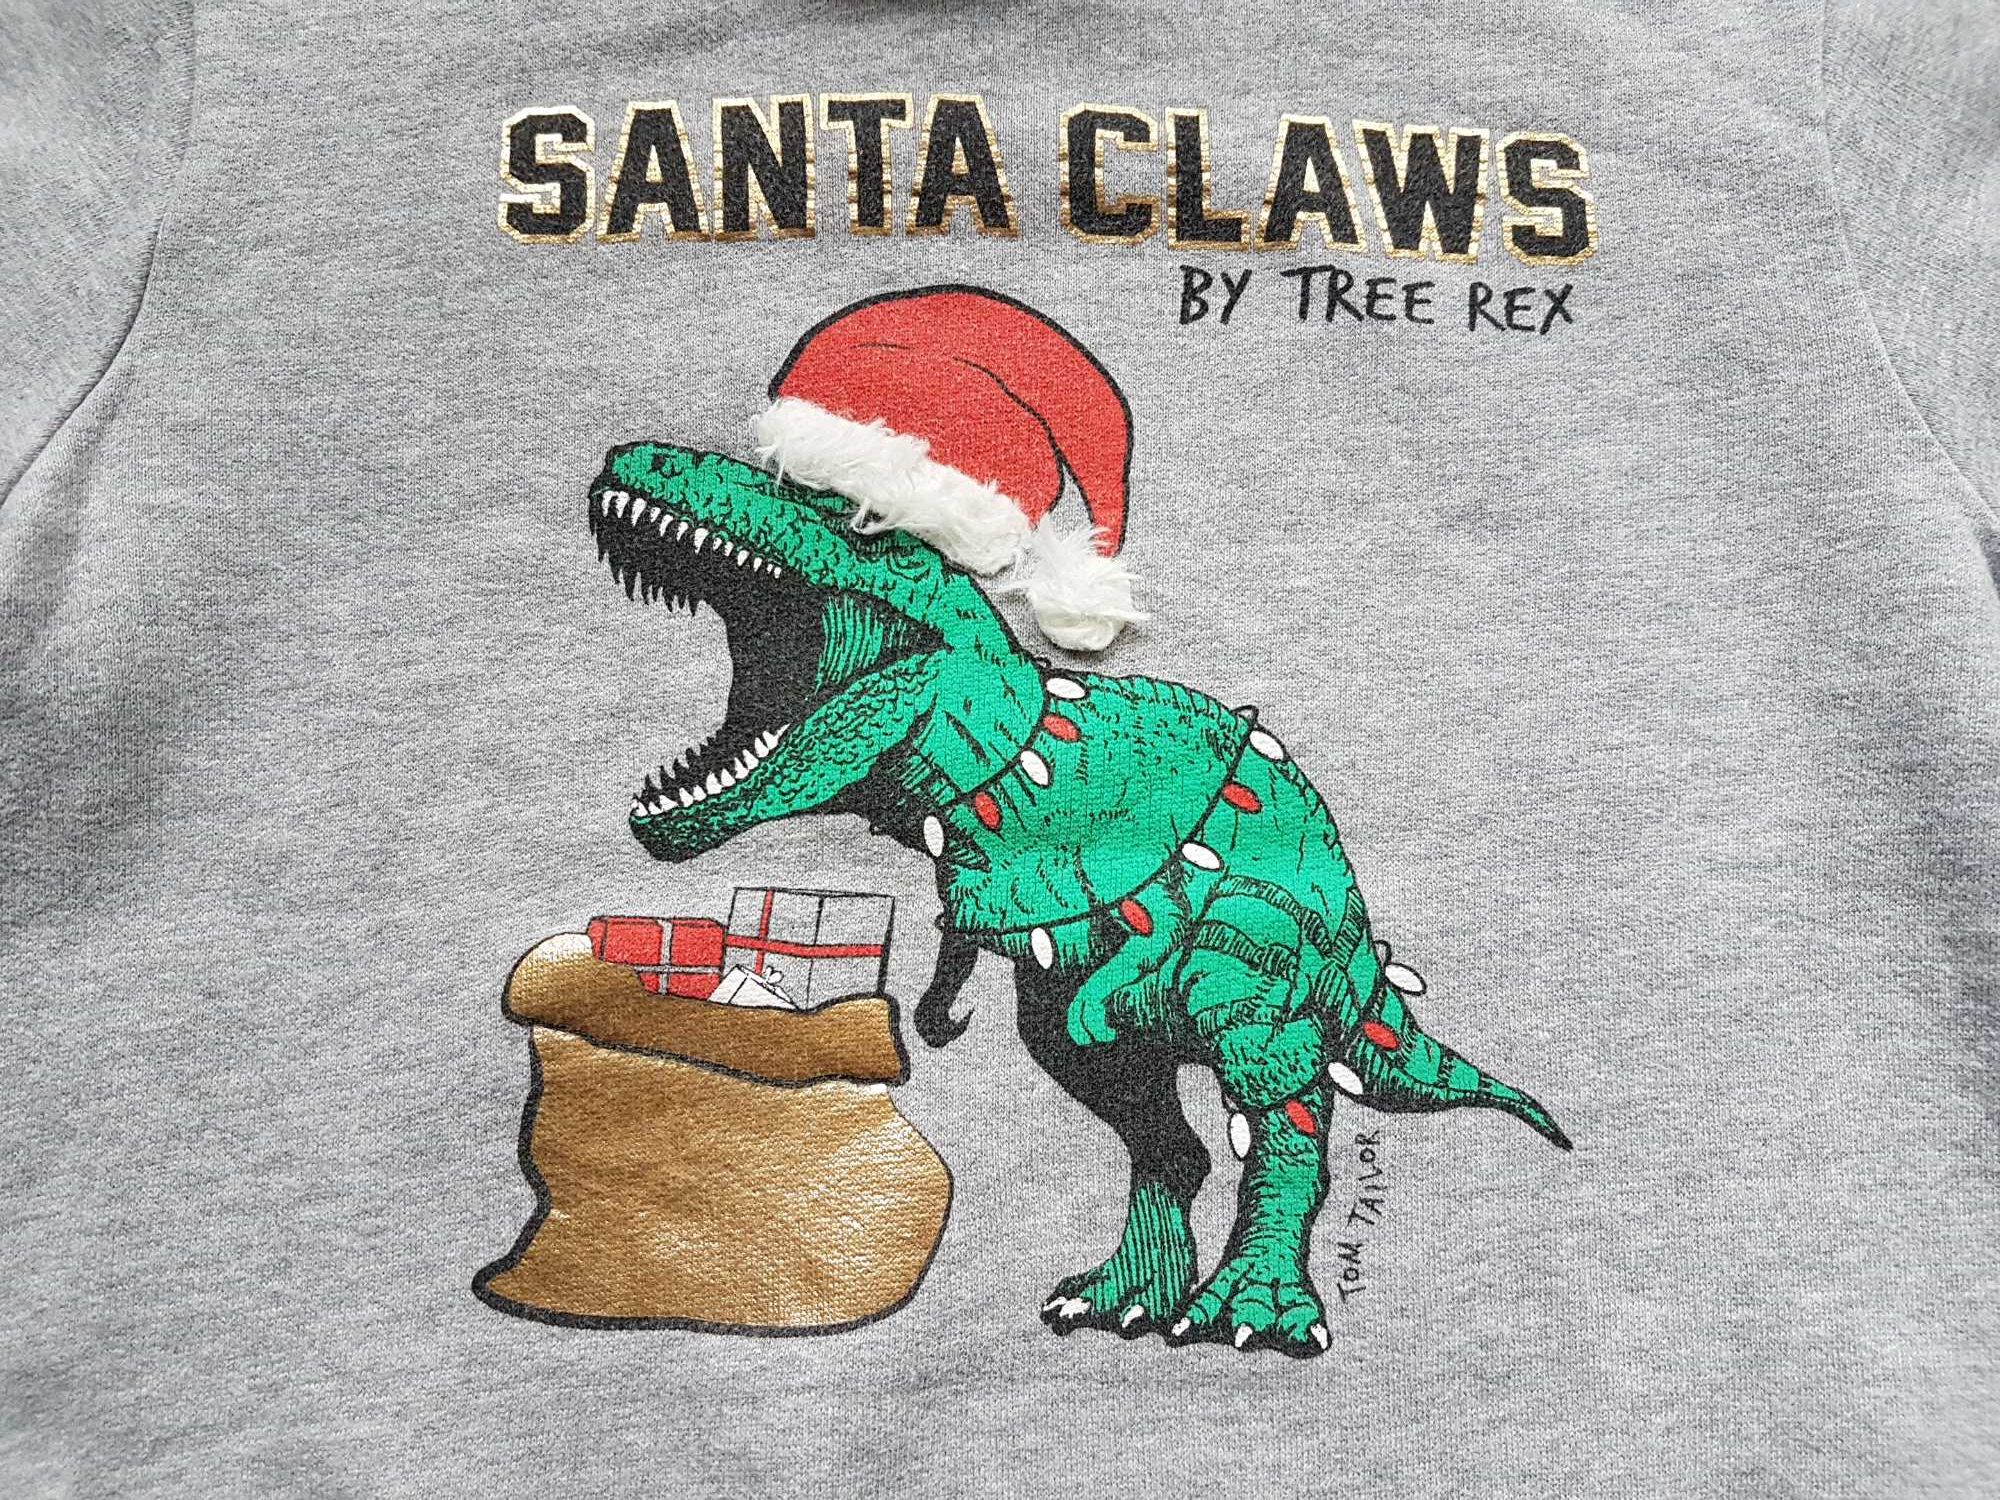 TOM TAILOR bluza Santa Claws by Tree Rex r. 104/110 Dinozaur Mikołaj